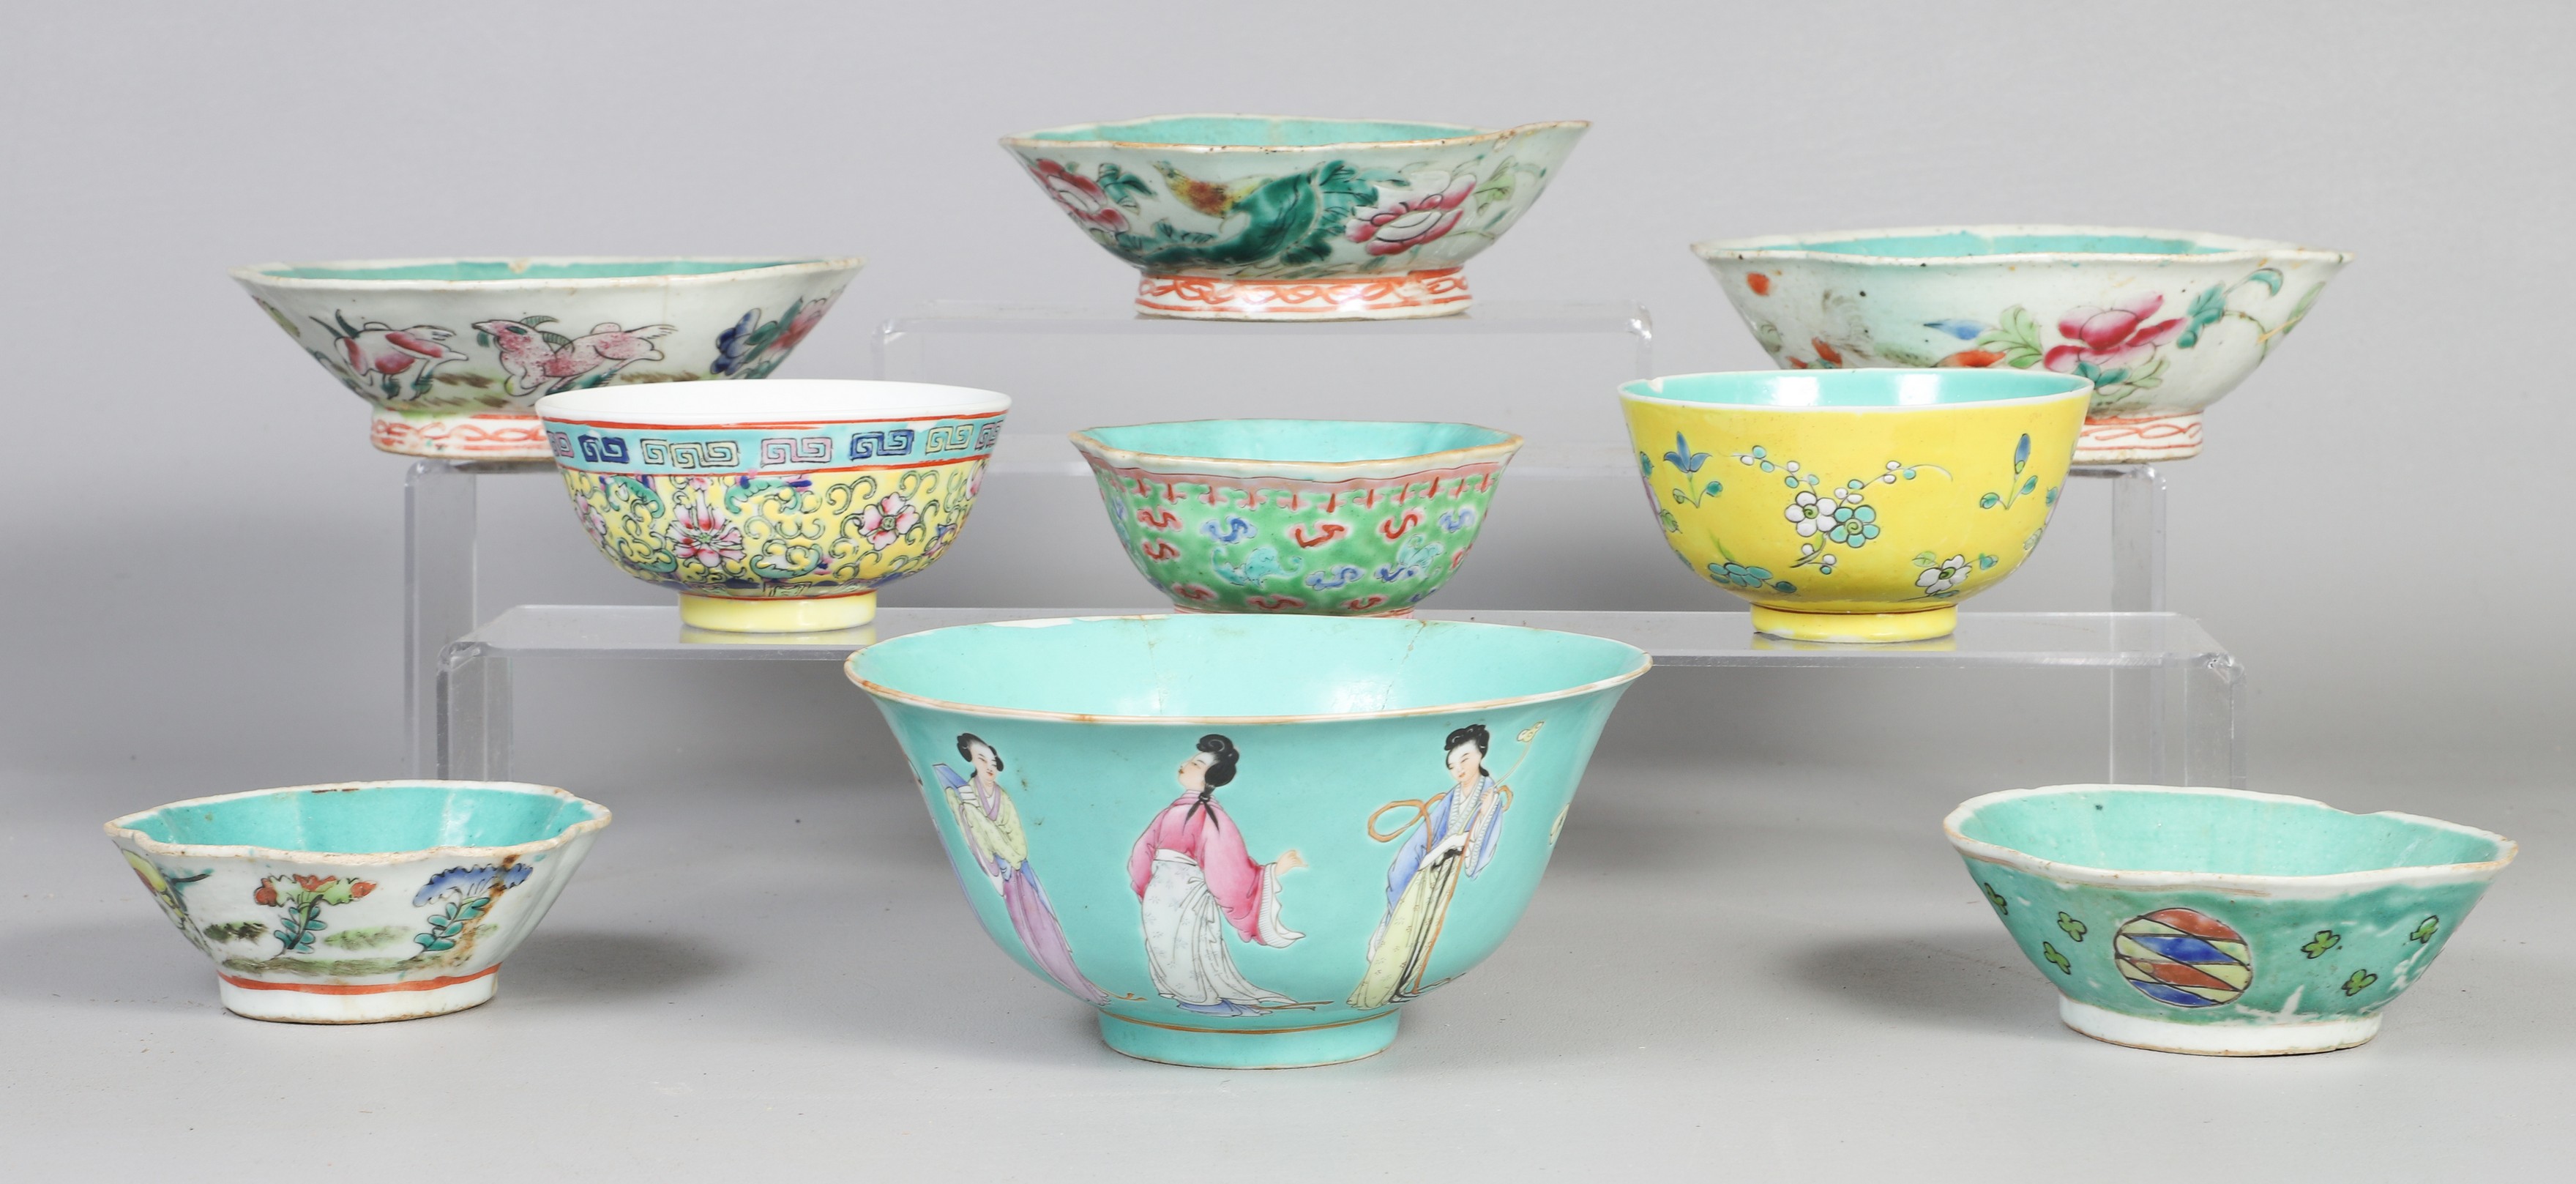  9 Asian porcelain bowls c o 2e0acc